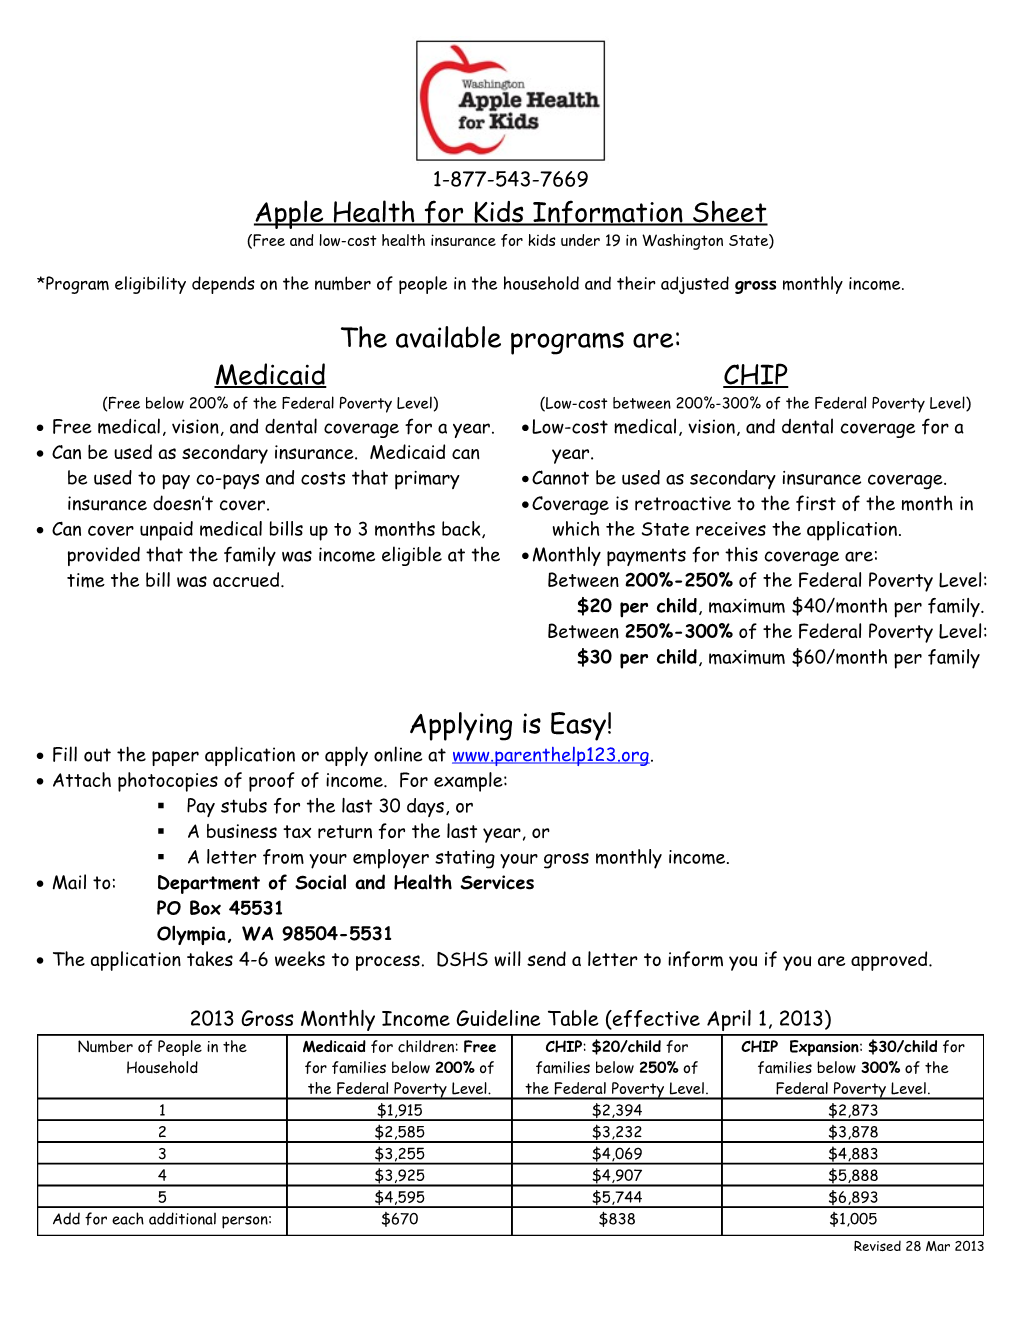 Apple Health for Kids Information Sheet